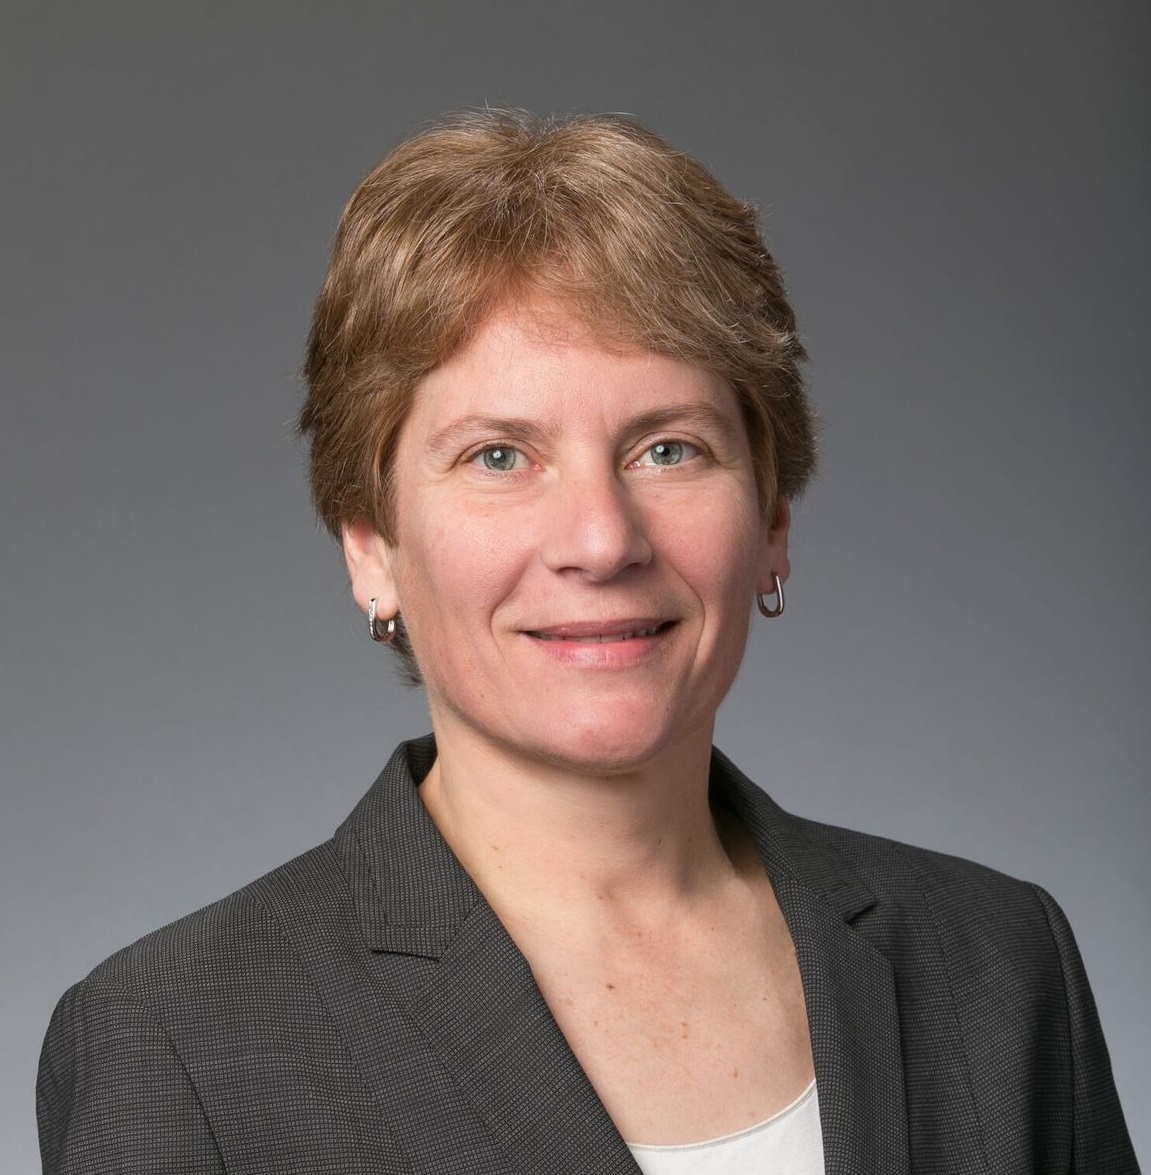 Professor Carolyn Bertozzi ForMemRS